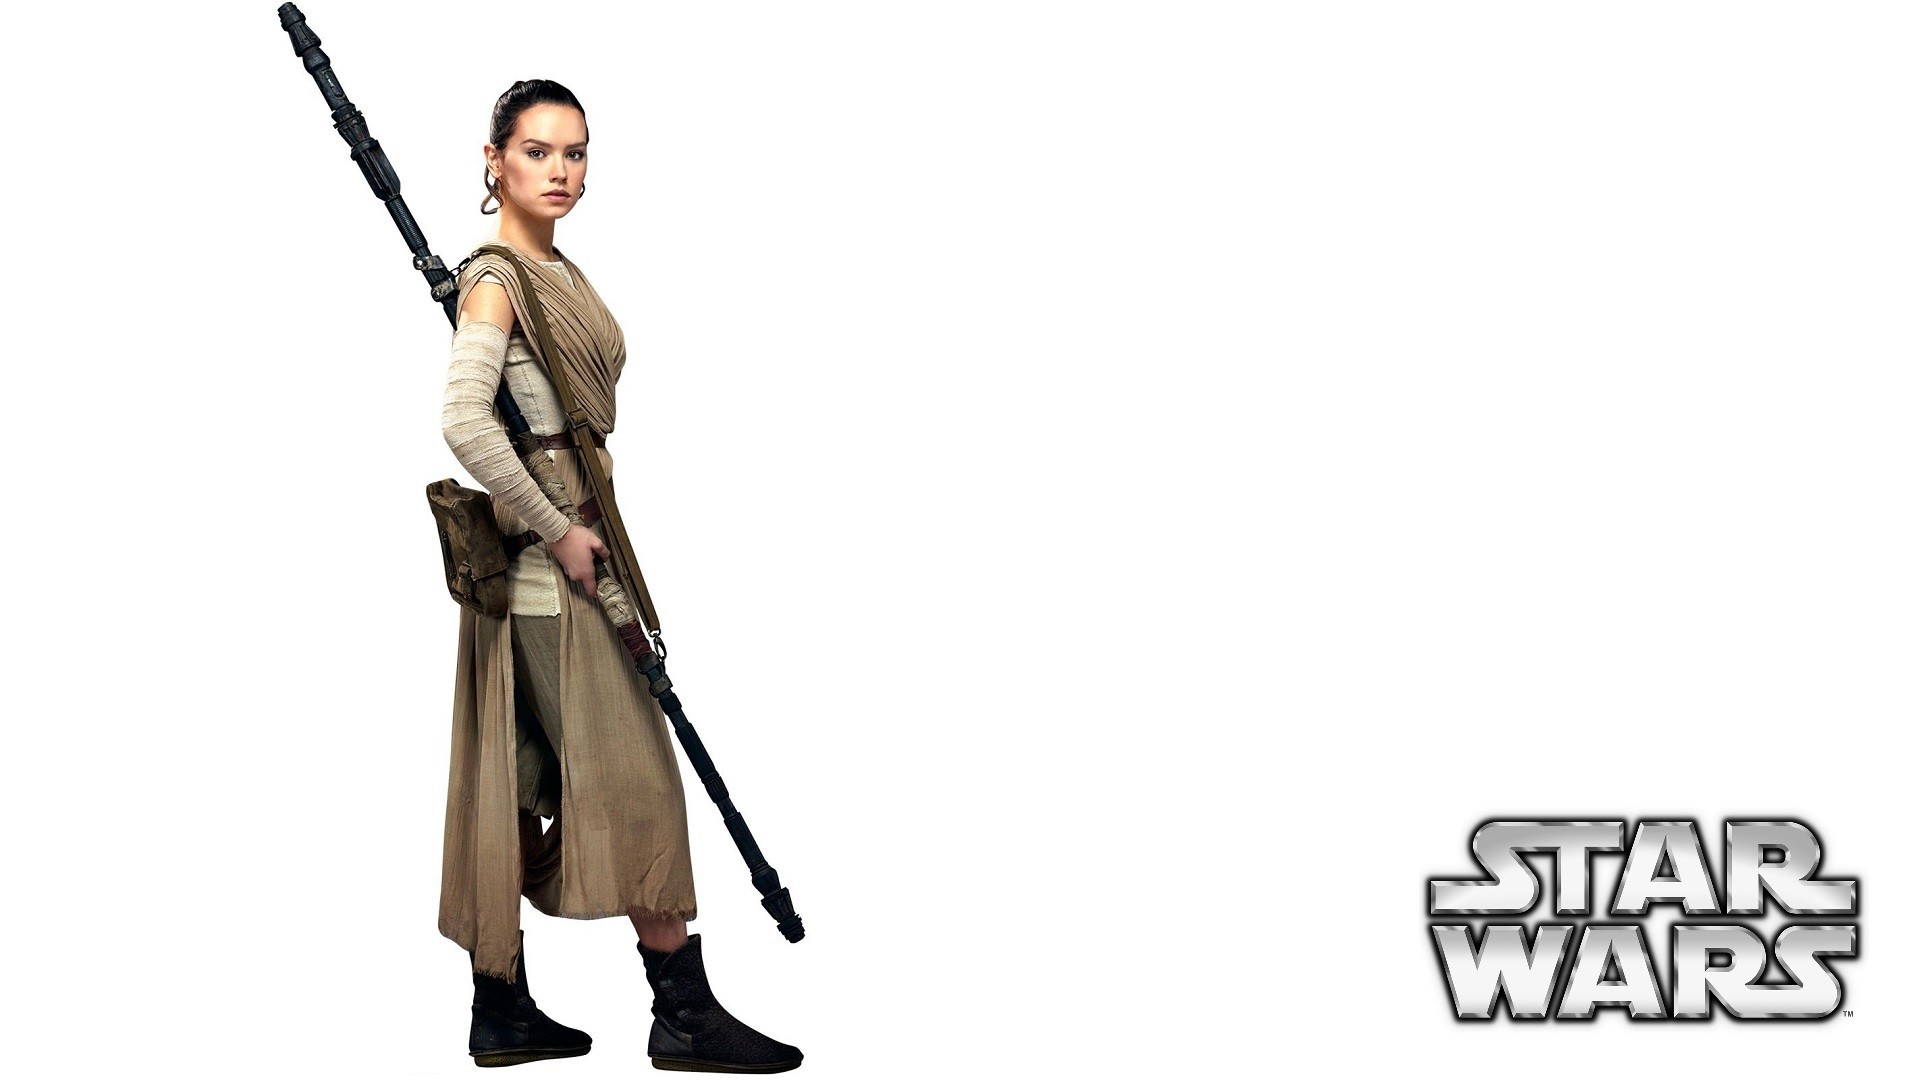 1920x1080 Star Wars - The Force Awakens: Daisy Ridley / Rey wallpaper white   (1080p)